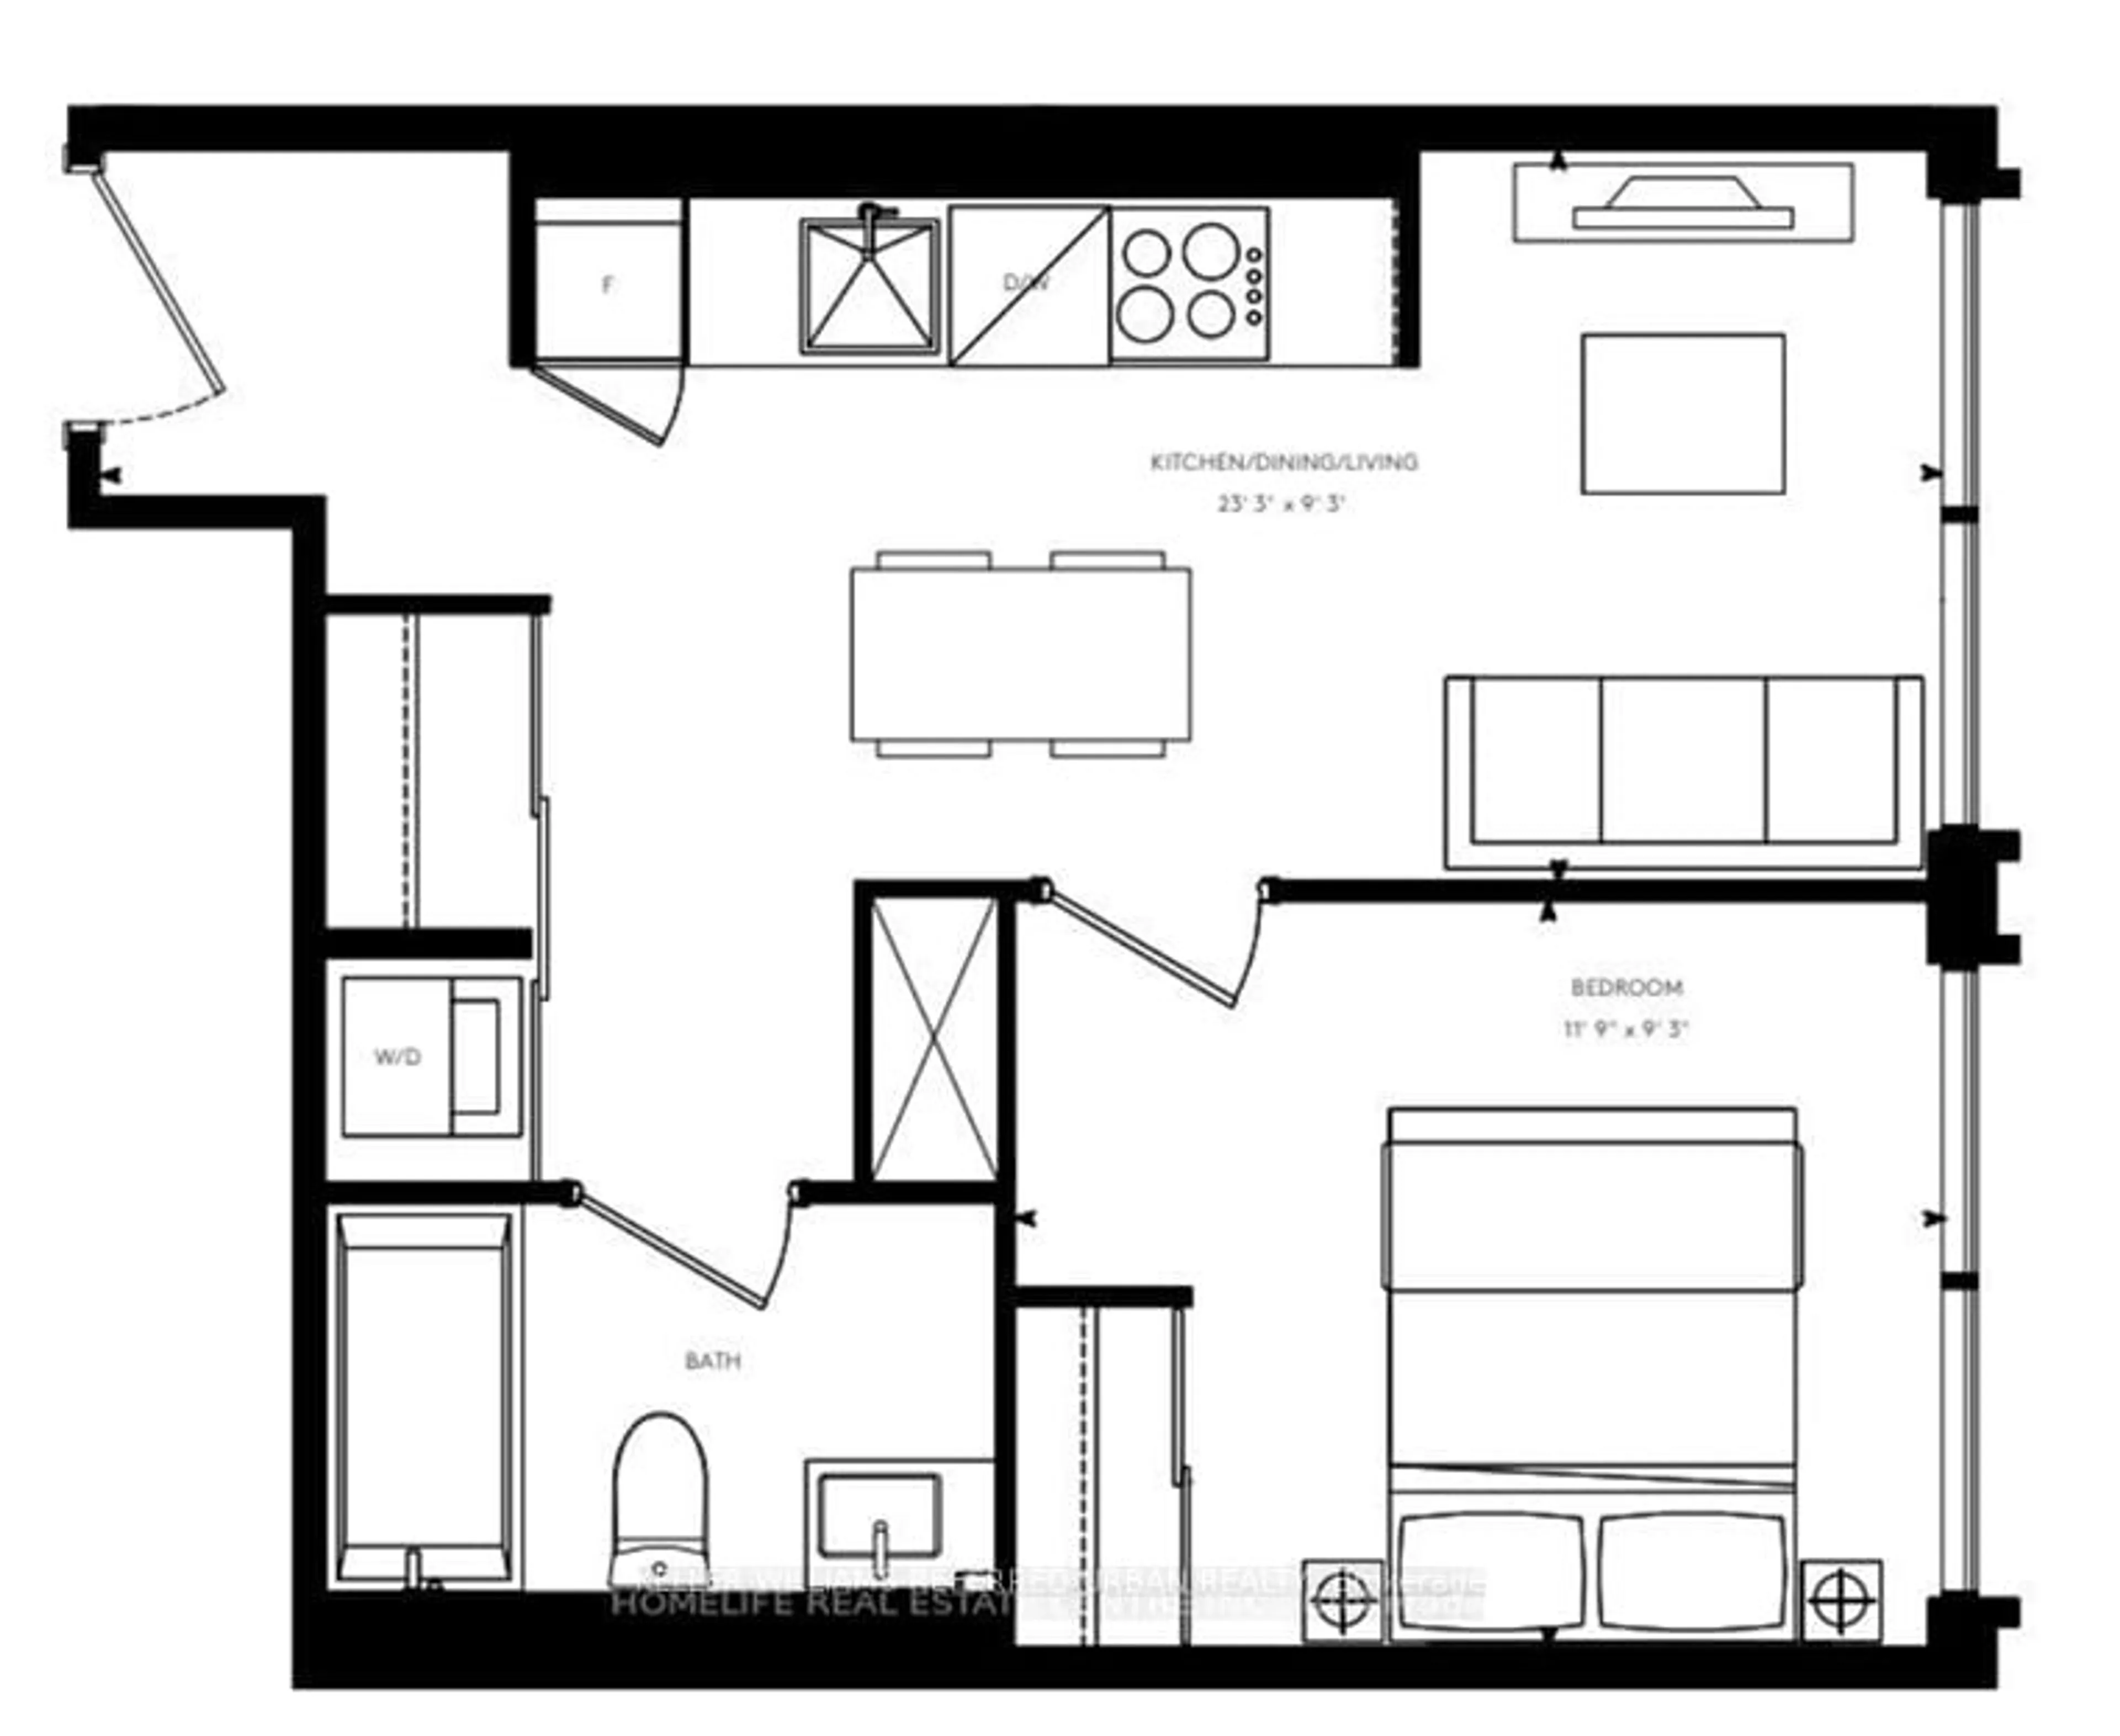 Floor plan for 199 Church St #1001, Toronto Ontario M5B 0C5